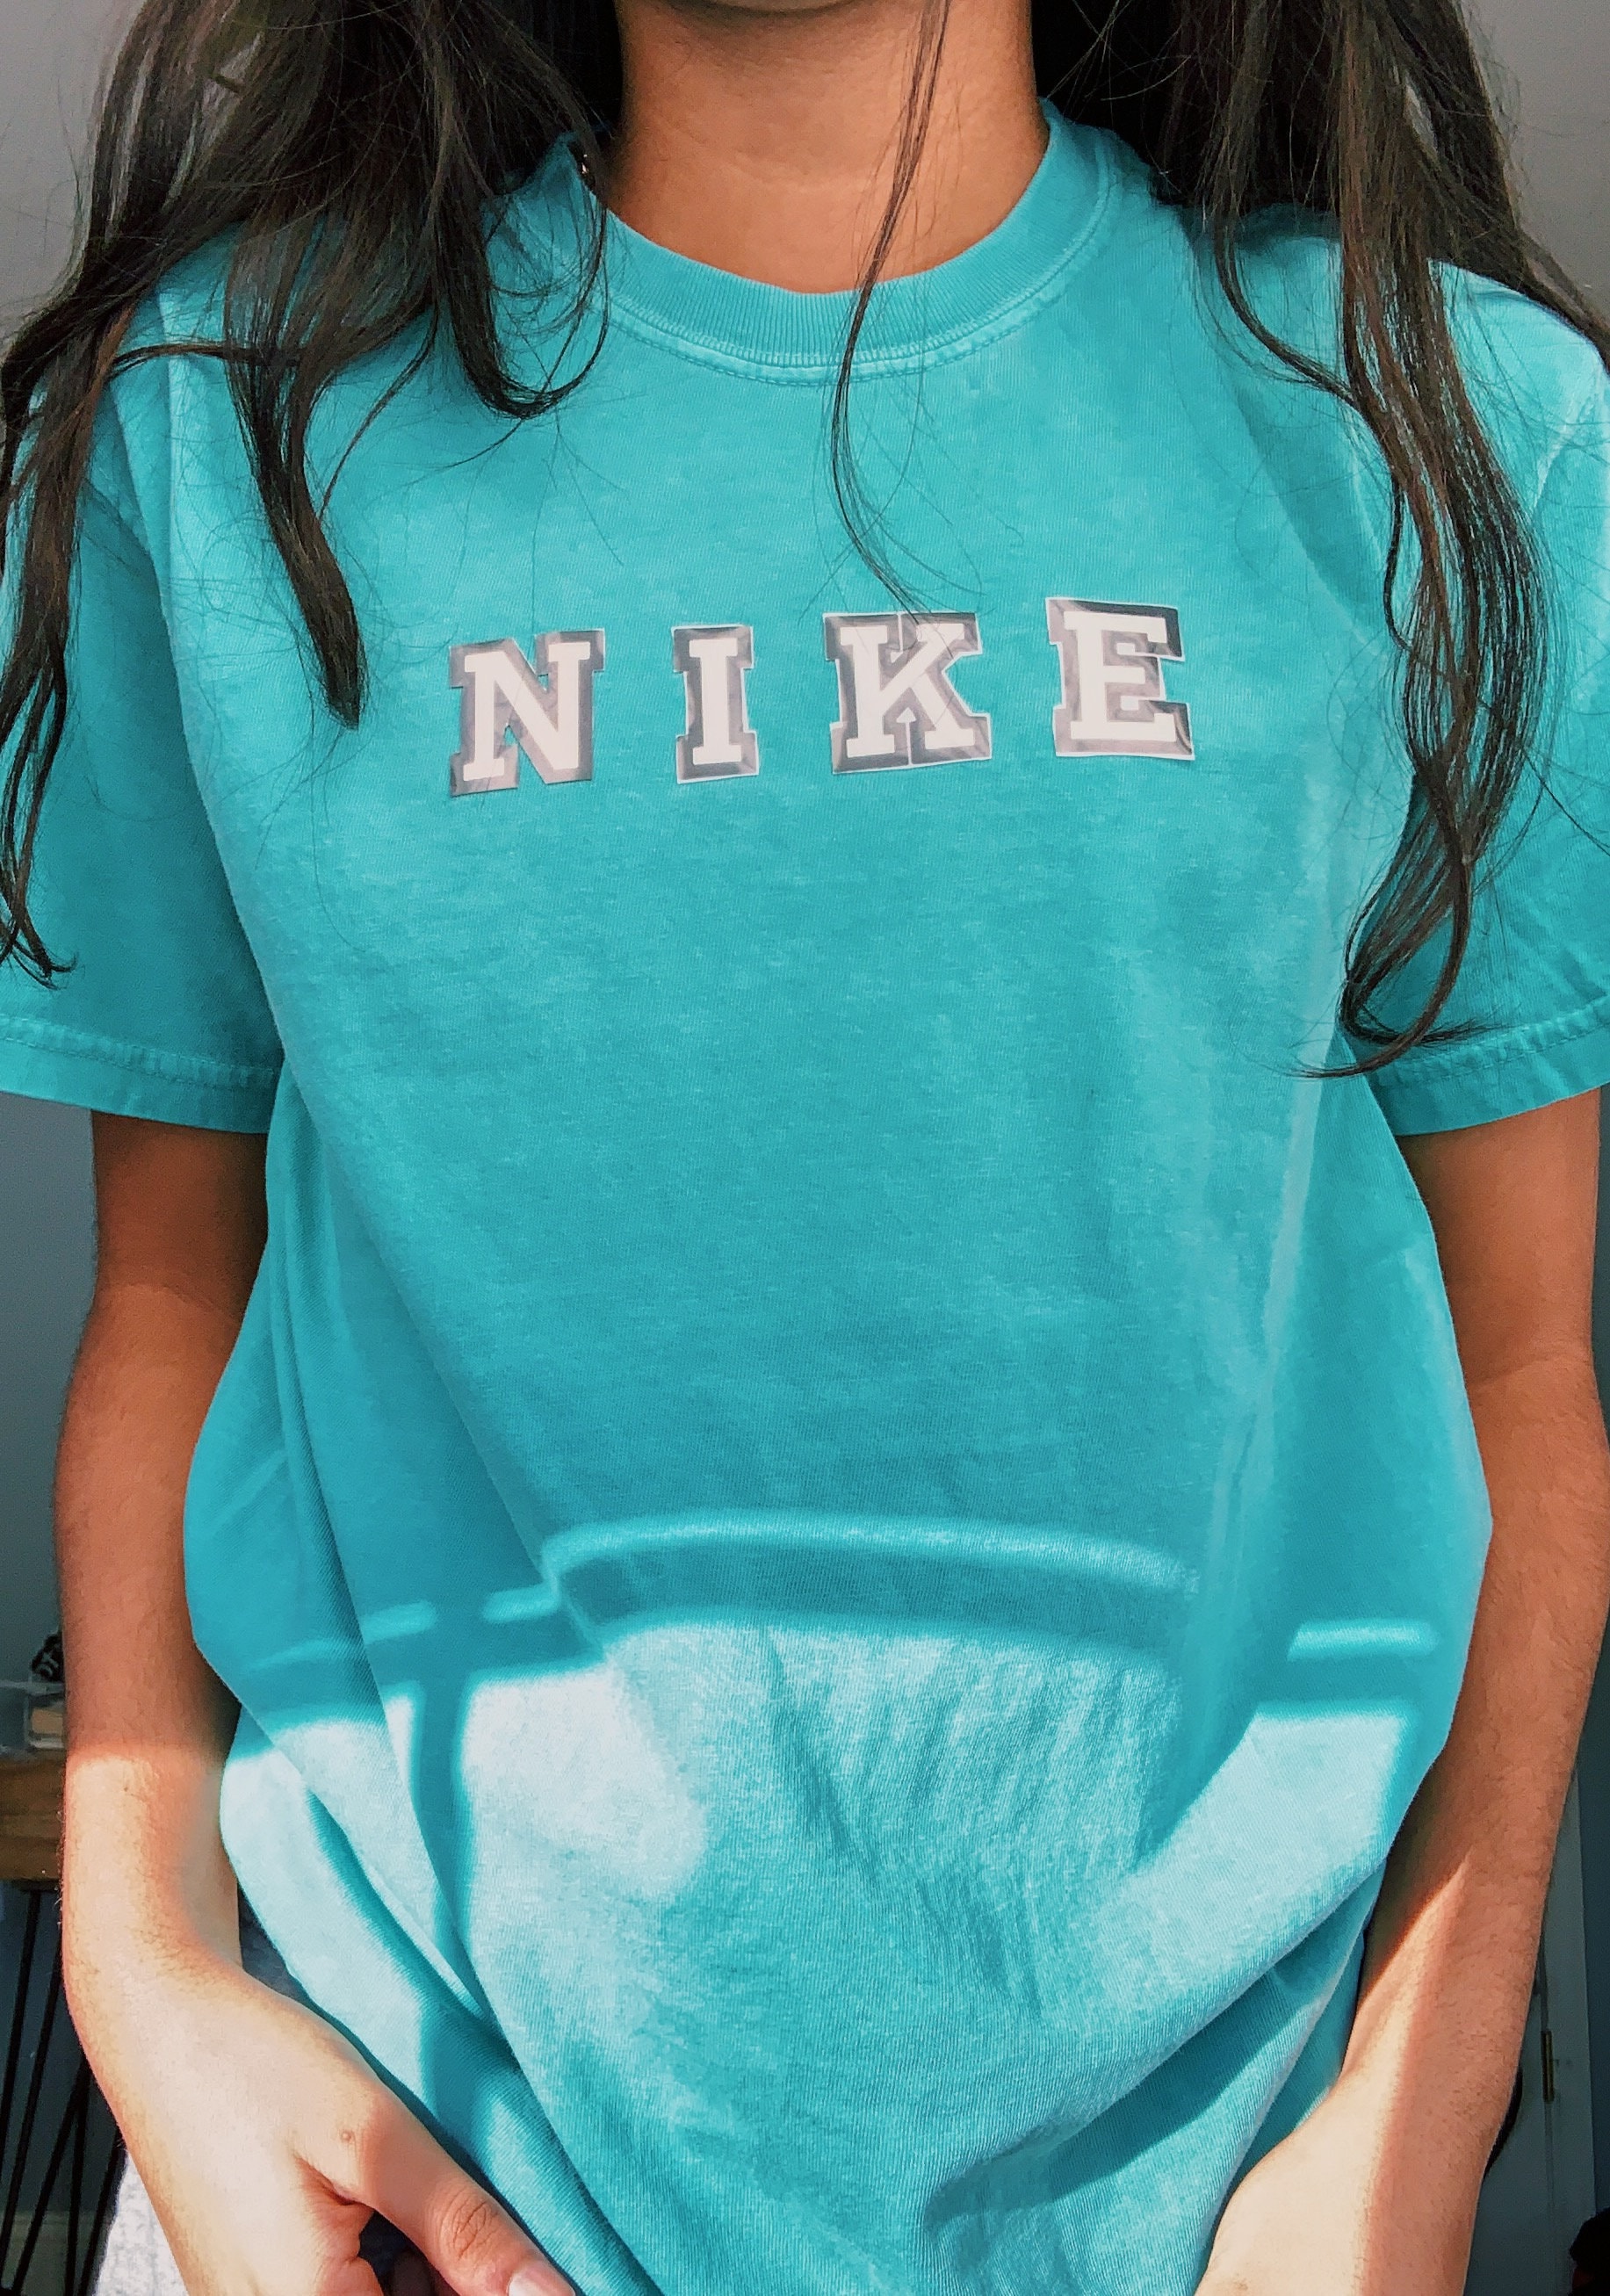 Blue Nike Shirt | Etsy